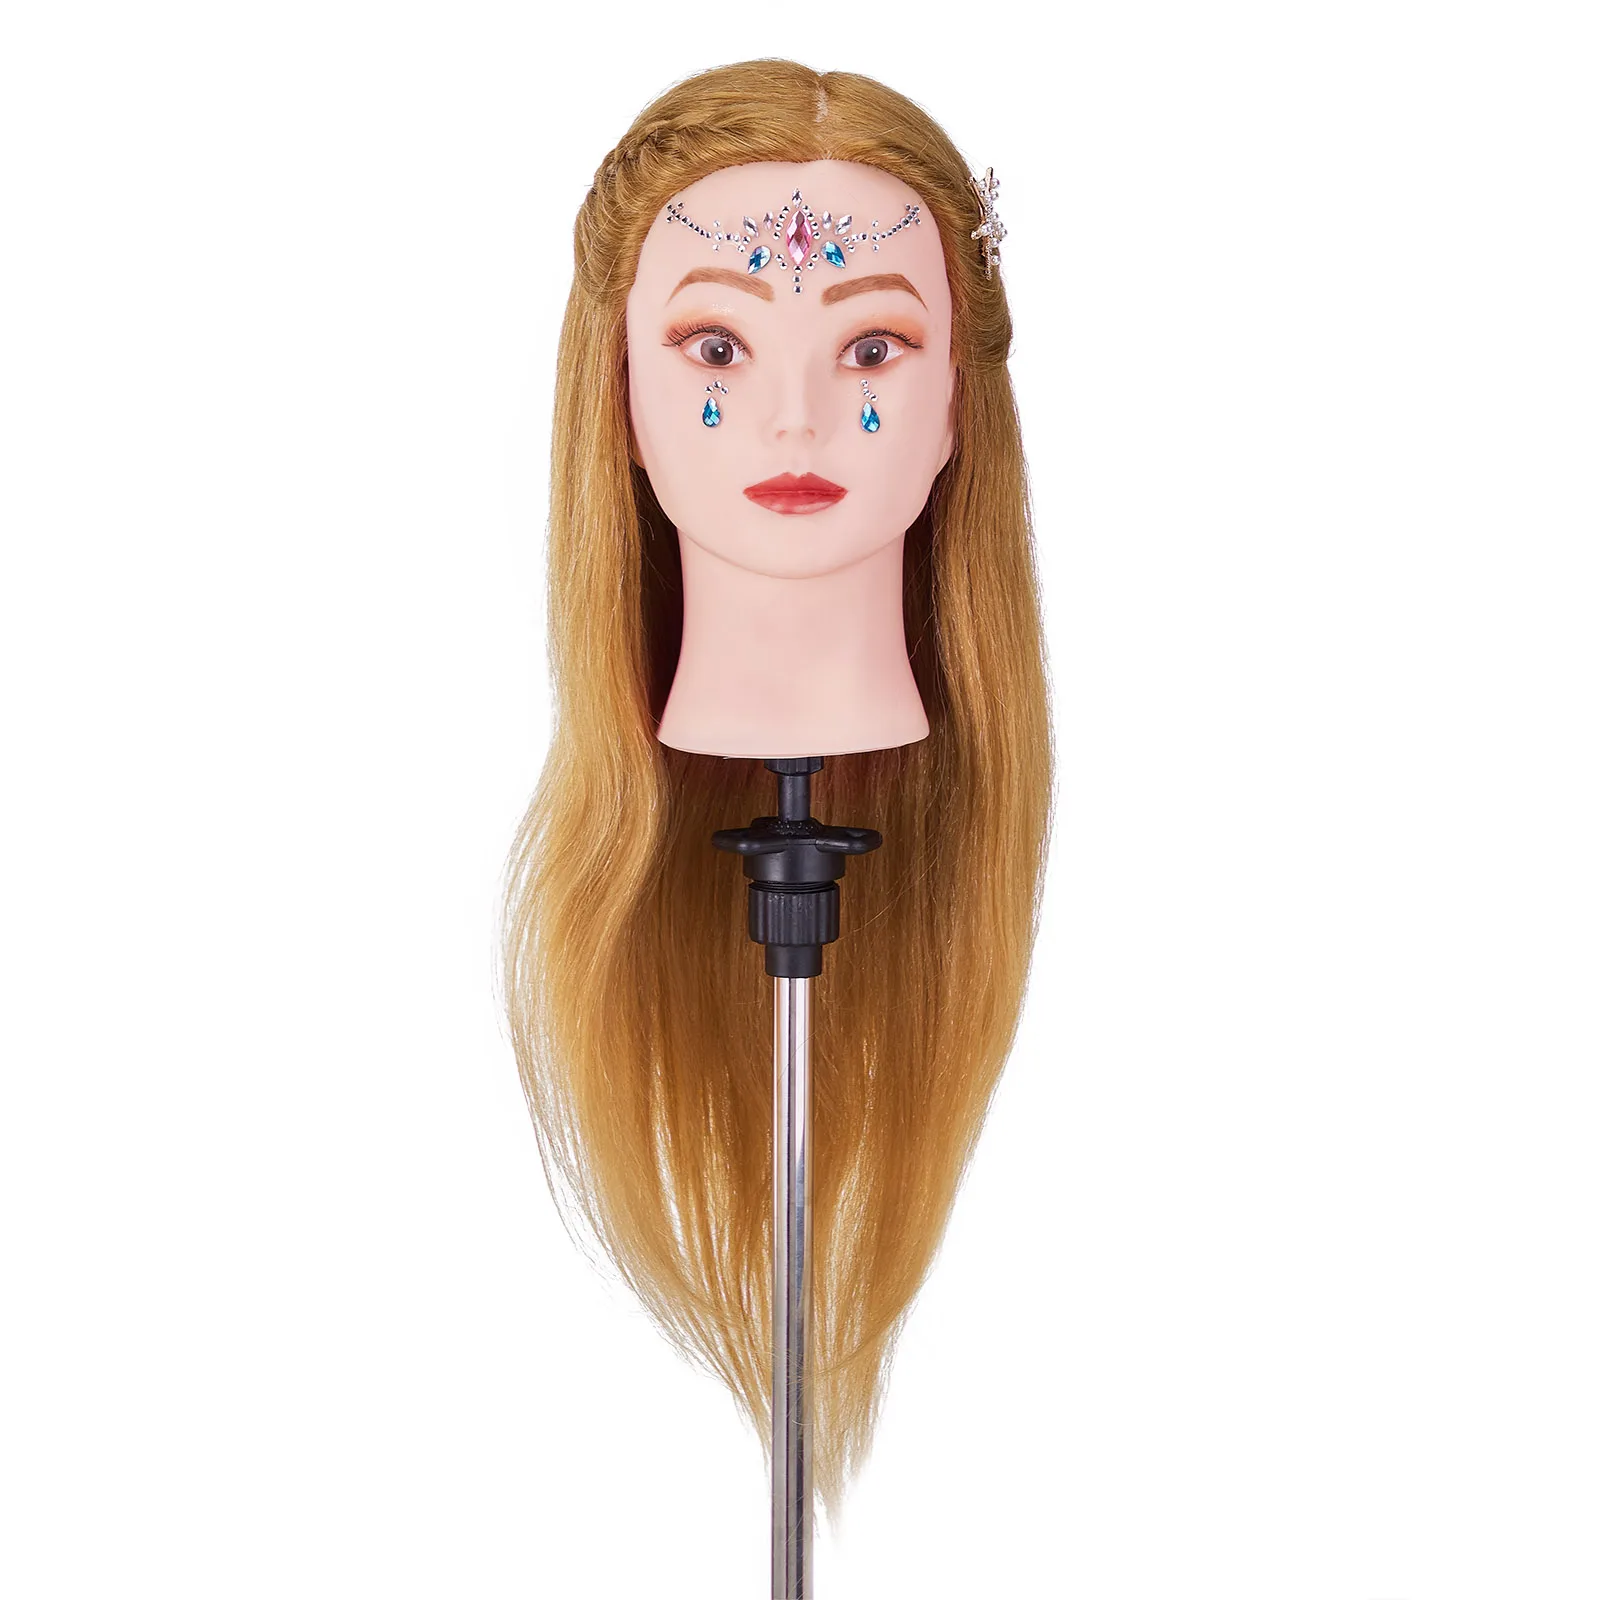 Cabeza de Maniquí de pelo humano Real para peluquería profesional, cabeza de muñeca de cosmetología para entrenamiento de cabello, estilismo para peinados, 24 